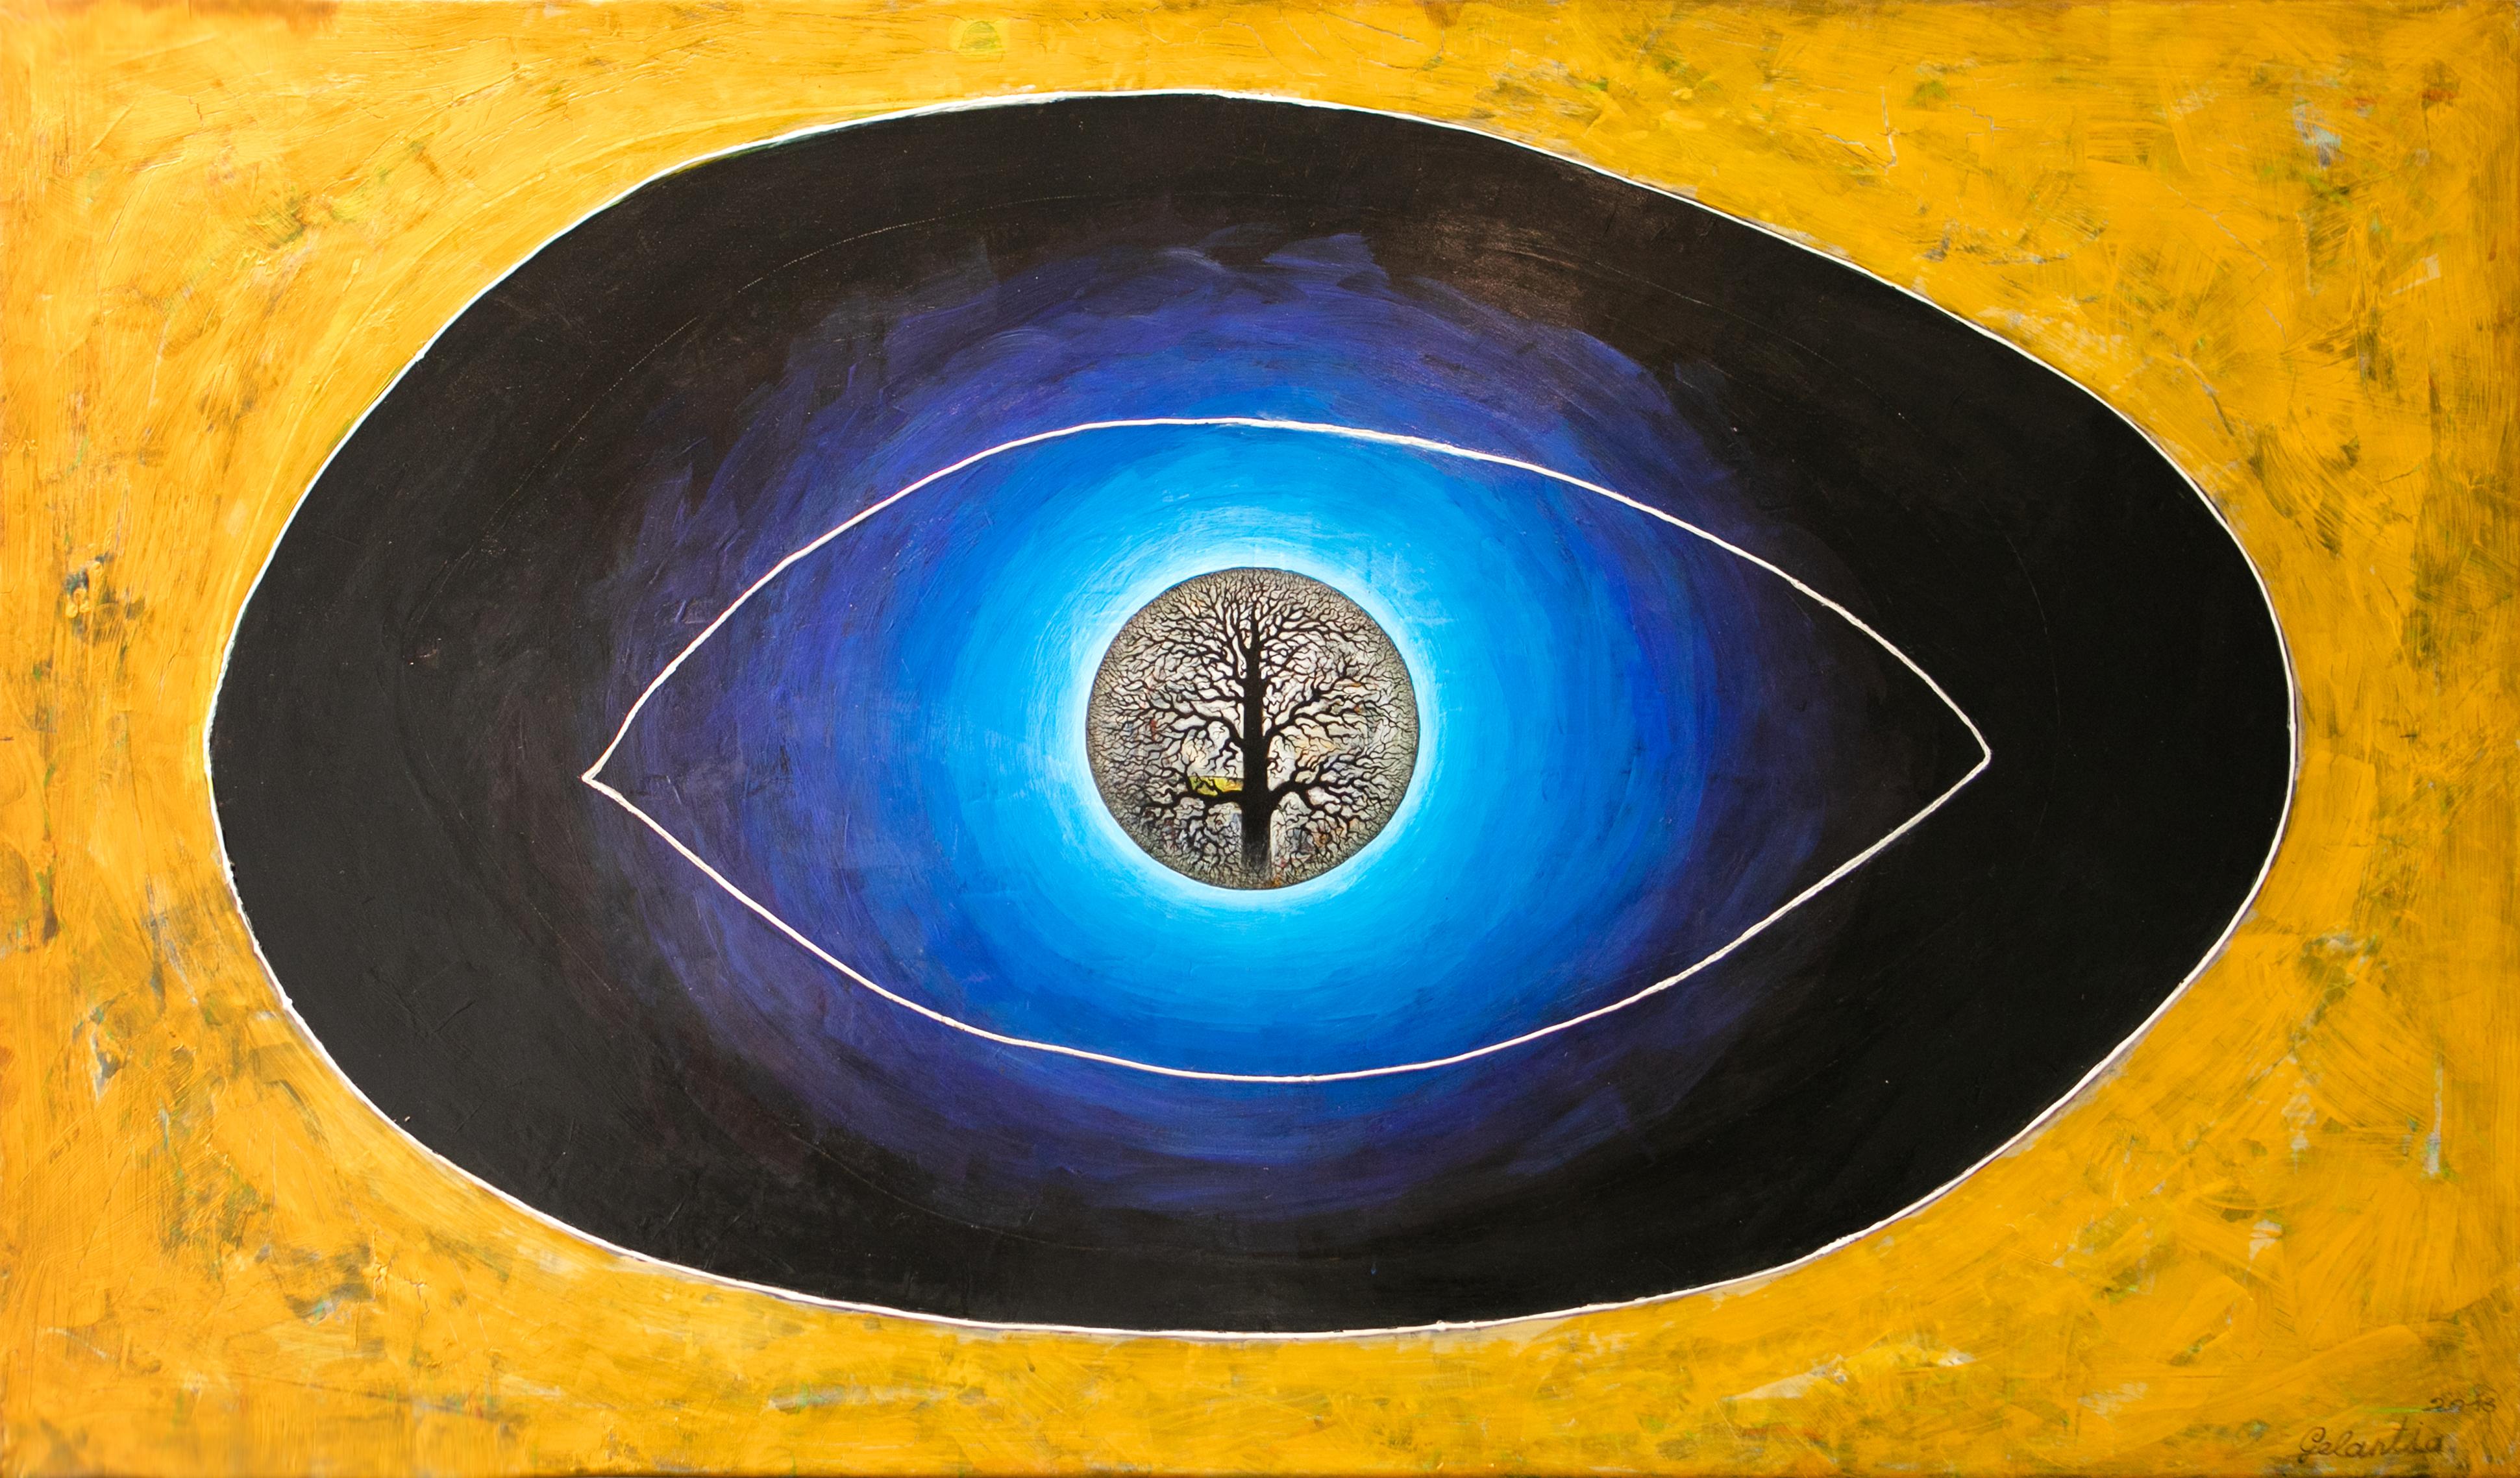 Gogi Gelantia Abstract Painting - Omnipresence - painting, contemporary, 21st century, eye, gold, blue, Georgian